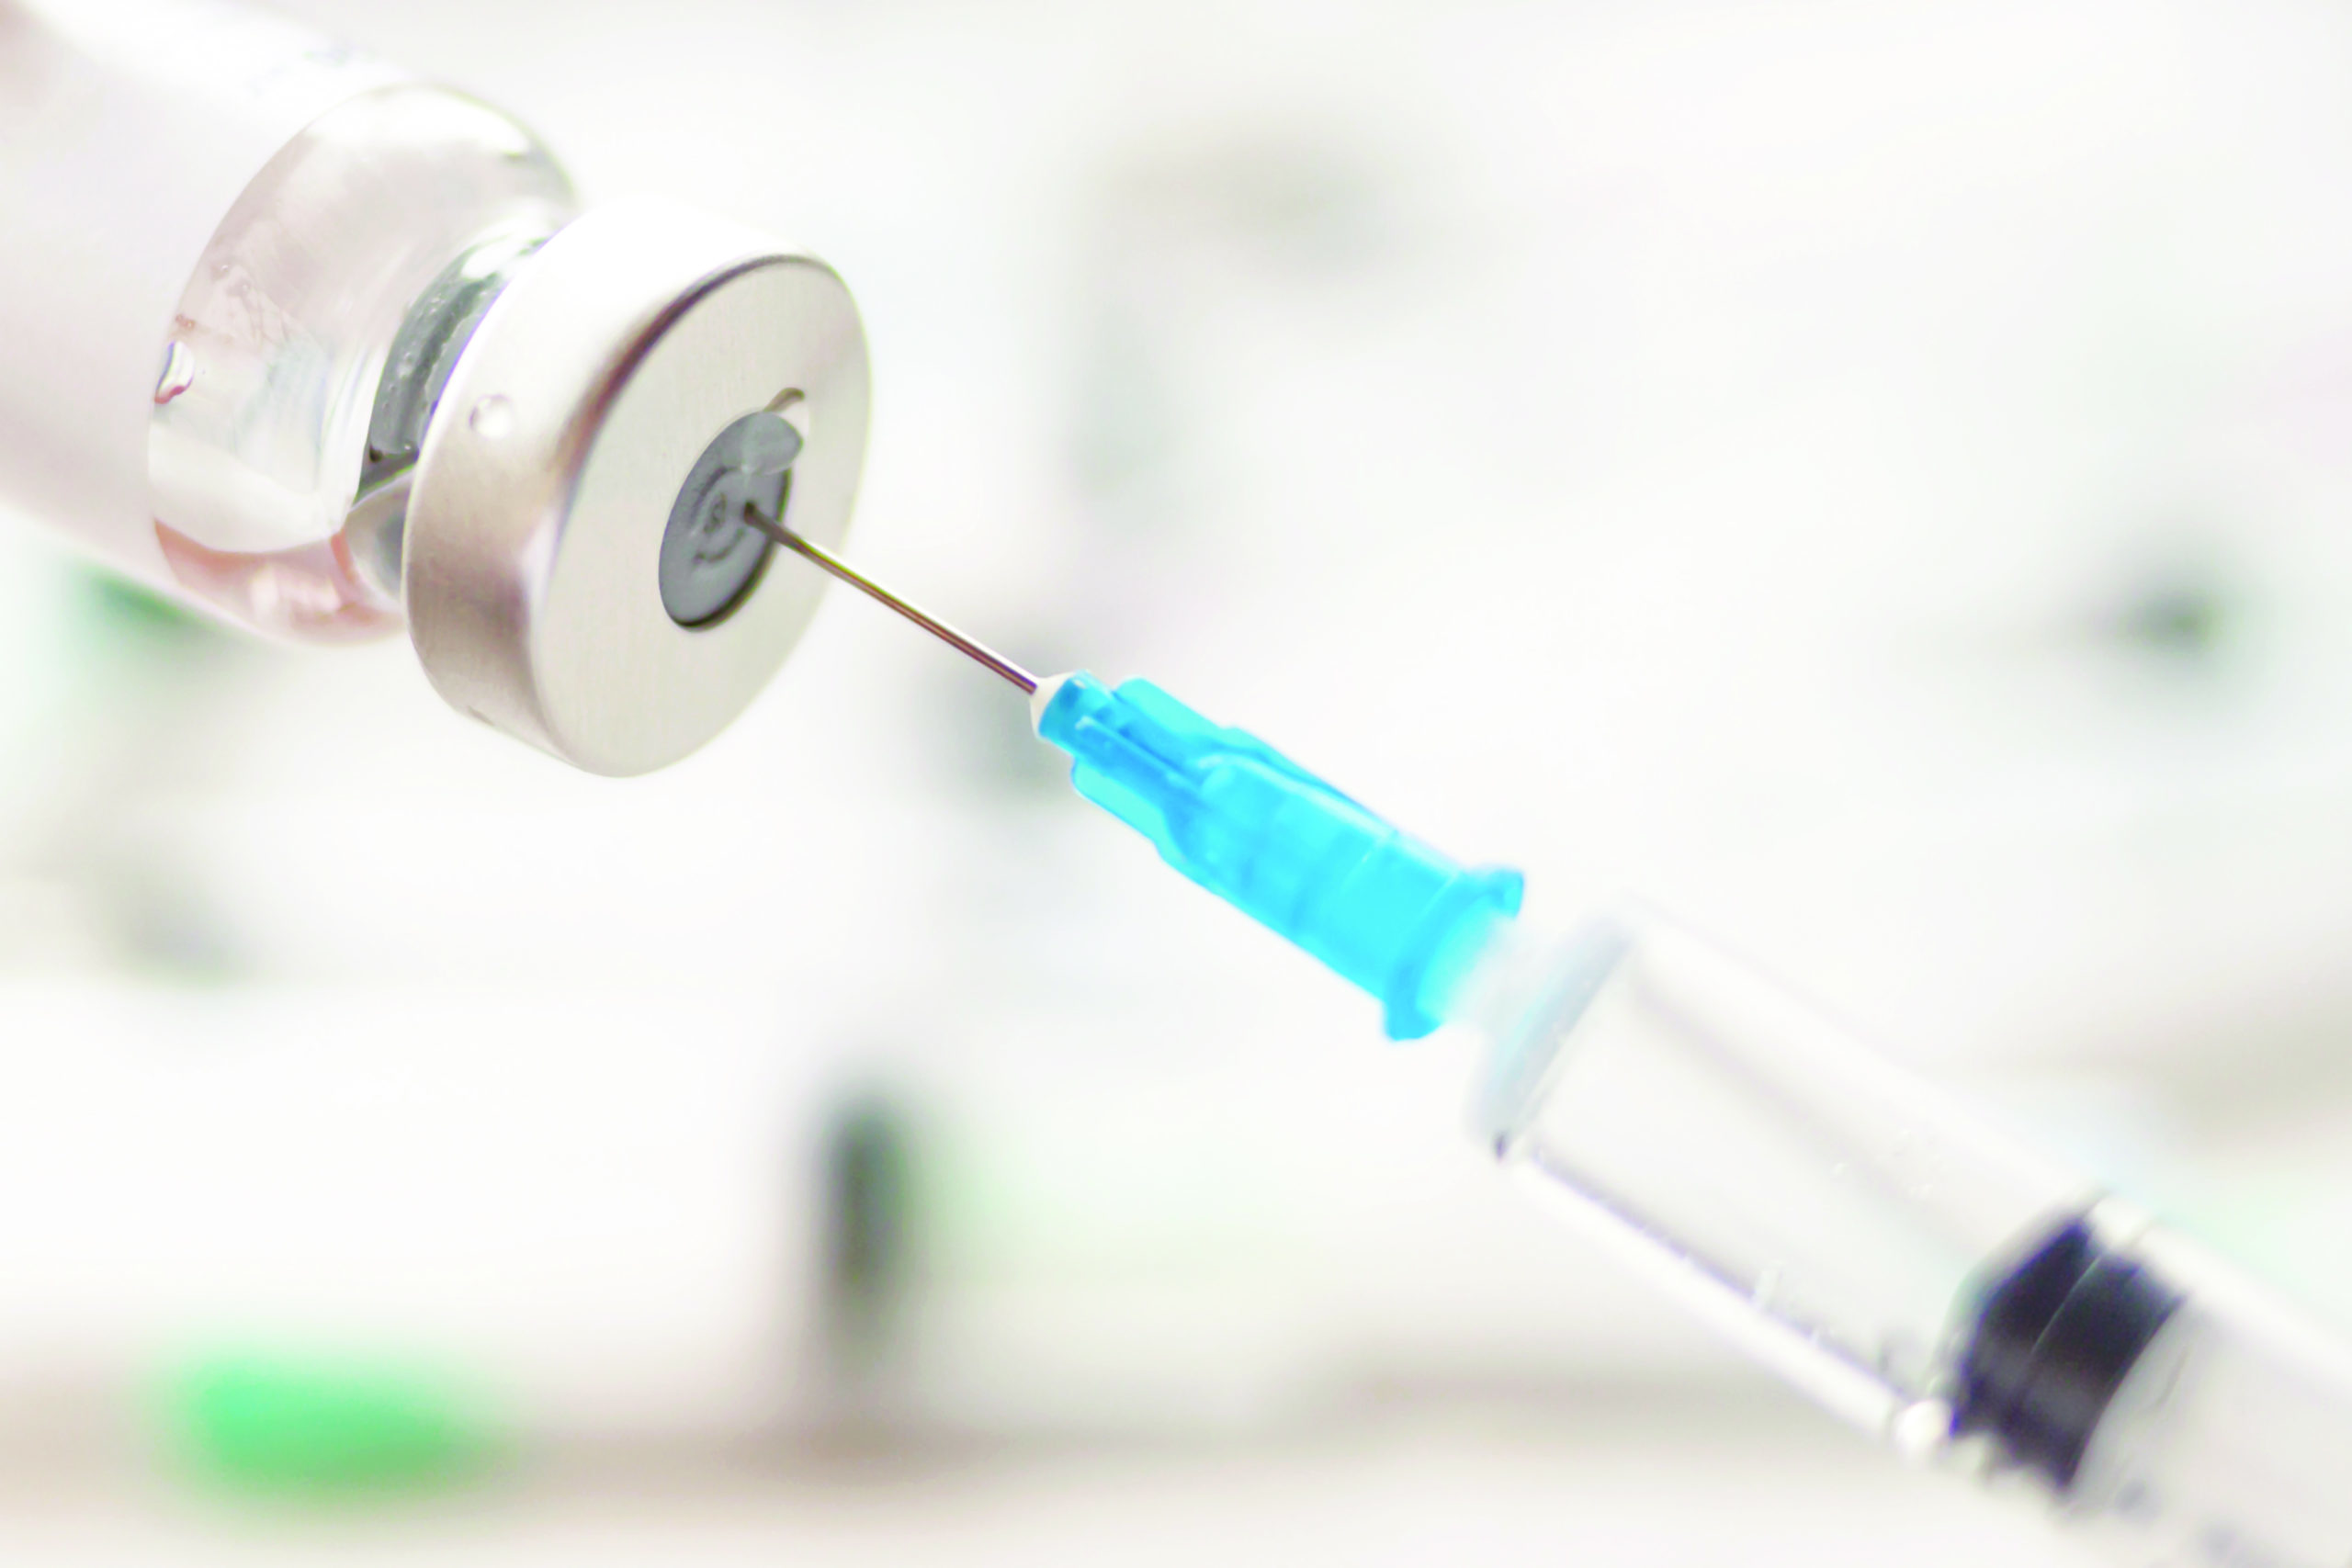 Dialing medicine into syringe from glass bottle. Ampoule and syringe needle close-up.